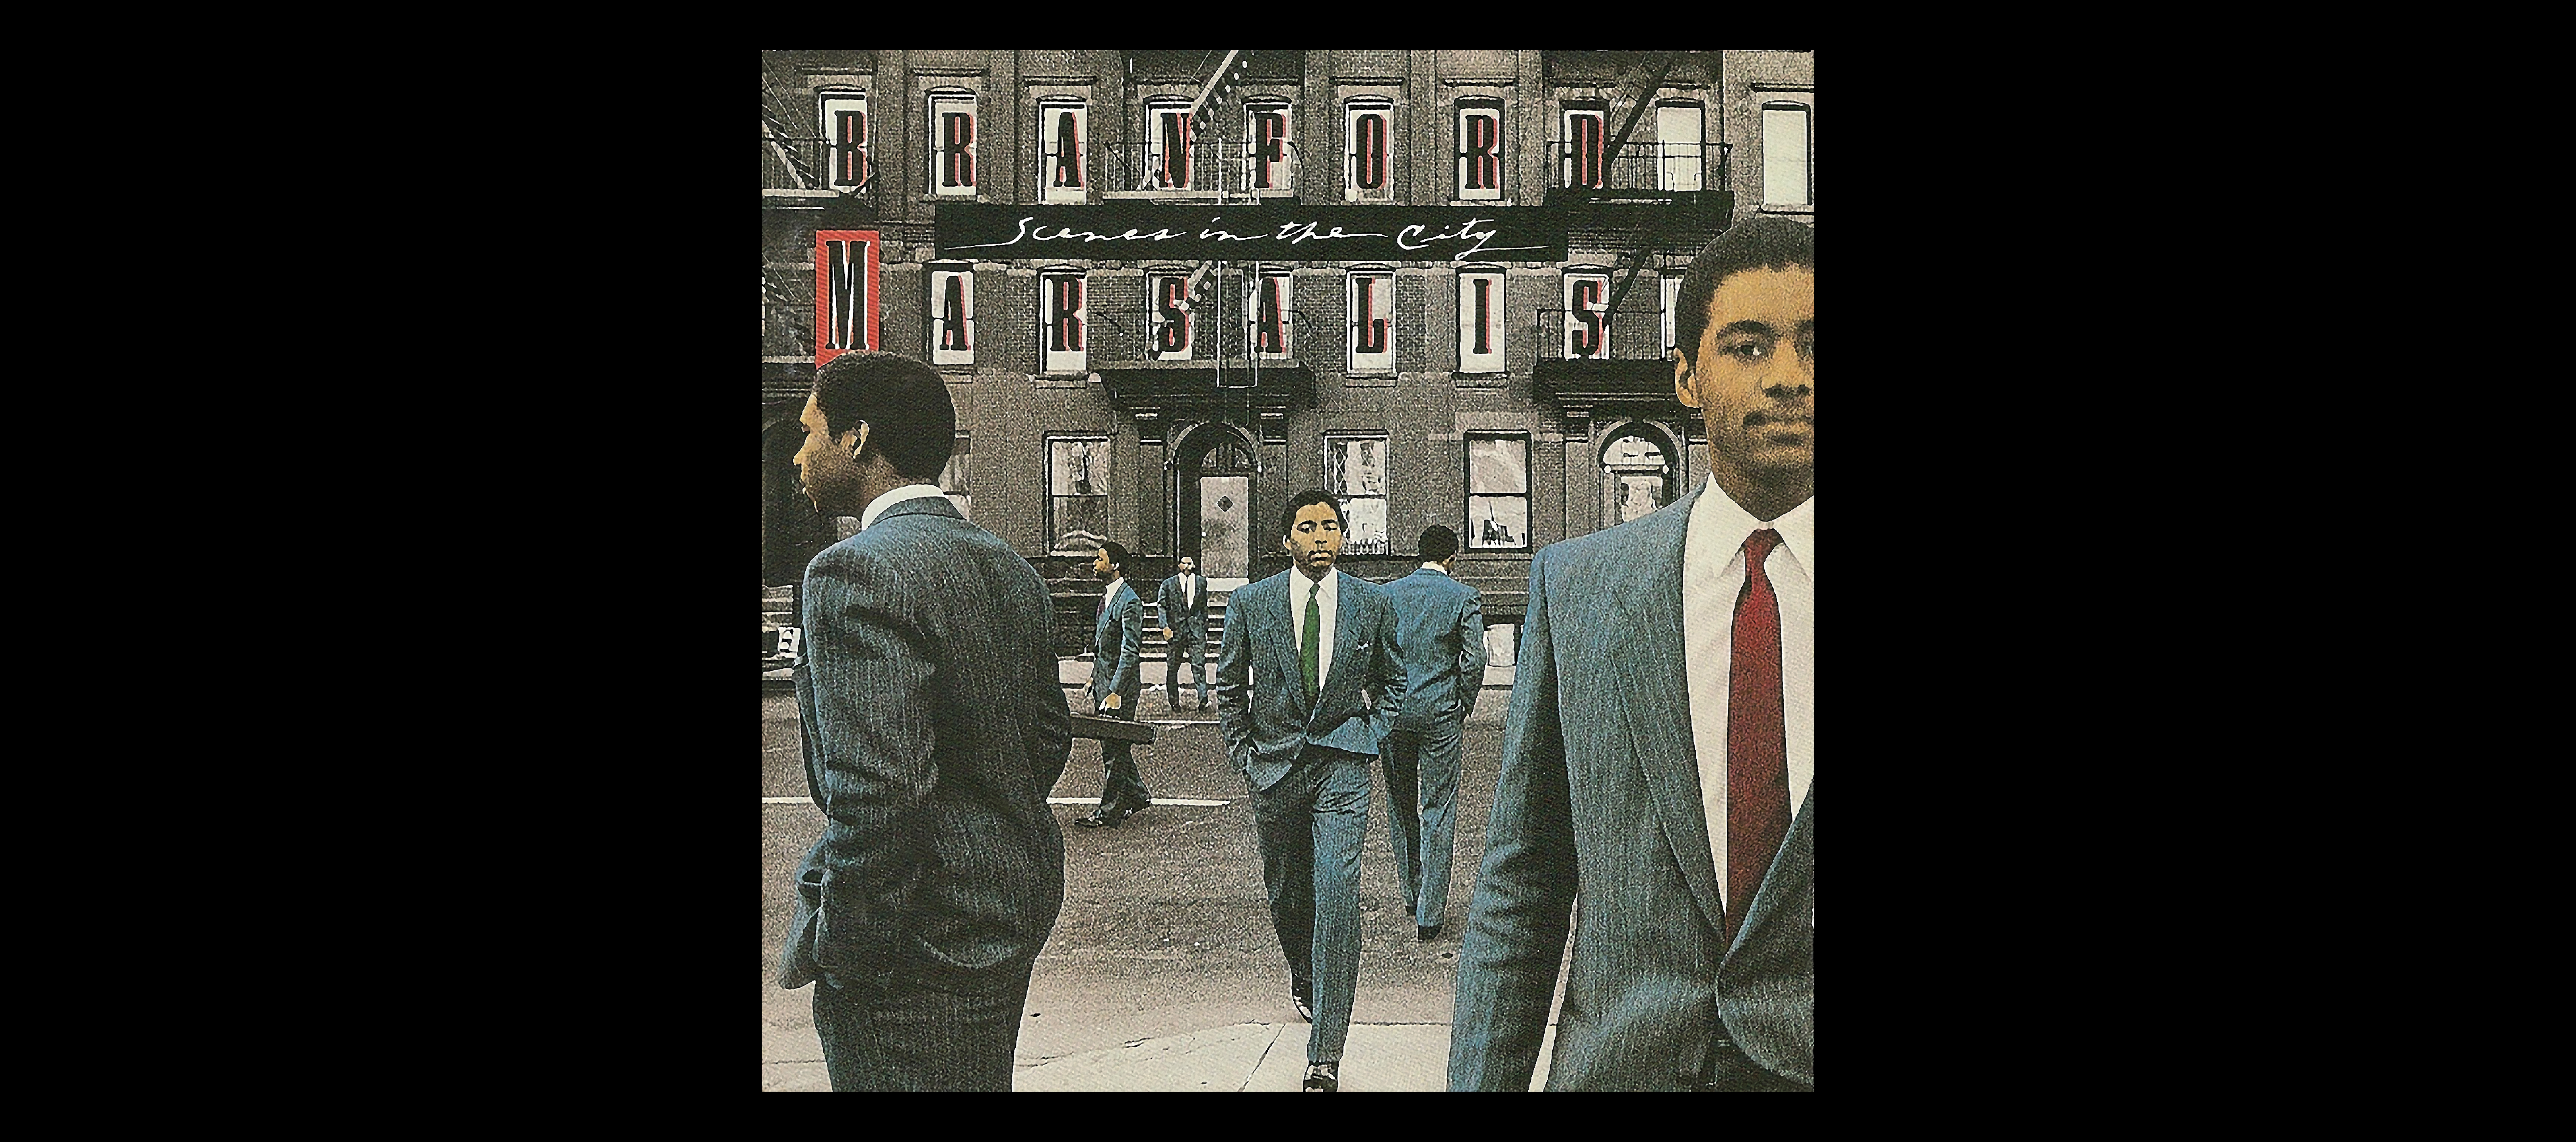 Duane Michals' "Branford Marsalis Album Cover Scenes in the City," 1984 against a black backdrop